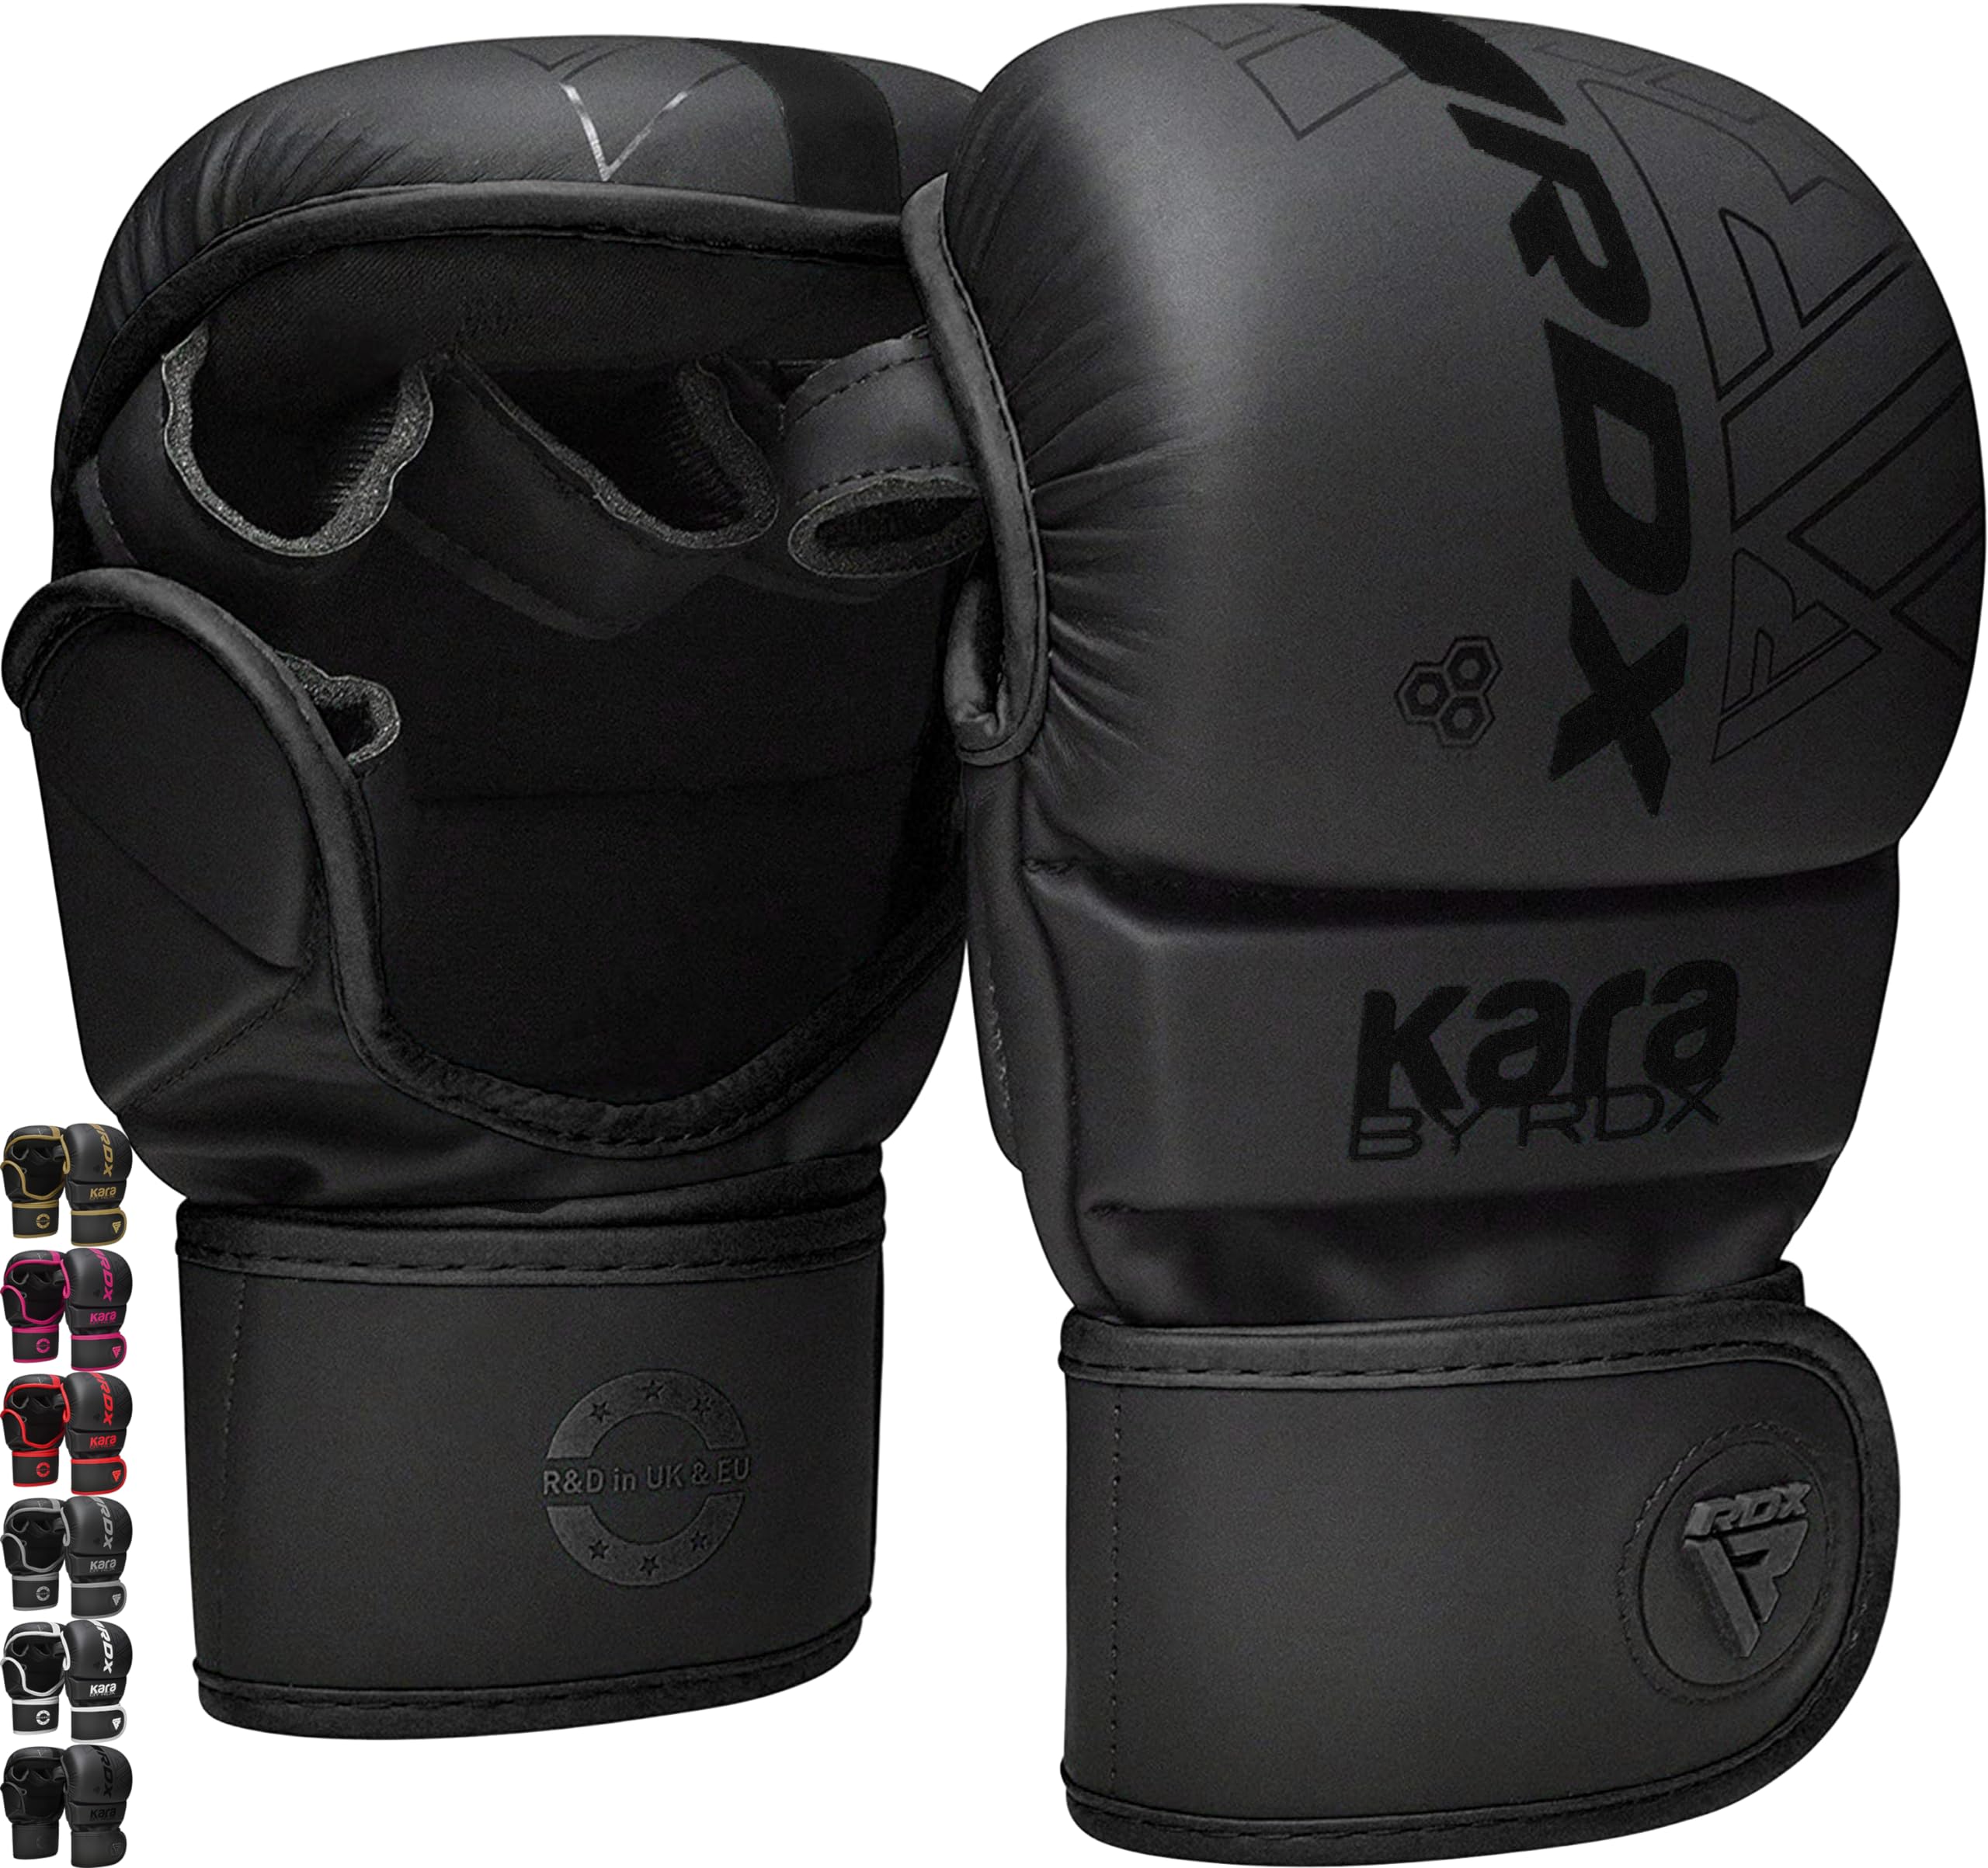 RDX MMA Handschuhe für Kampfsport Grappling Training, Maya Hide Leder Kara Sparring Handschuhe, Punchinghandschuhe für Muay Thai, Kickboxen, Freefight, Boxsack Gloves (MEHRWEG)